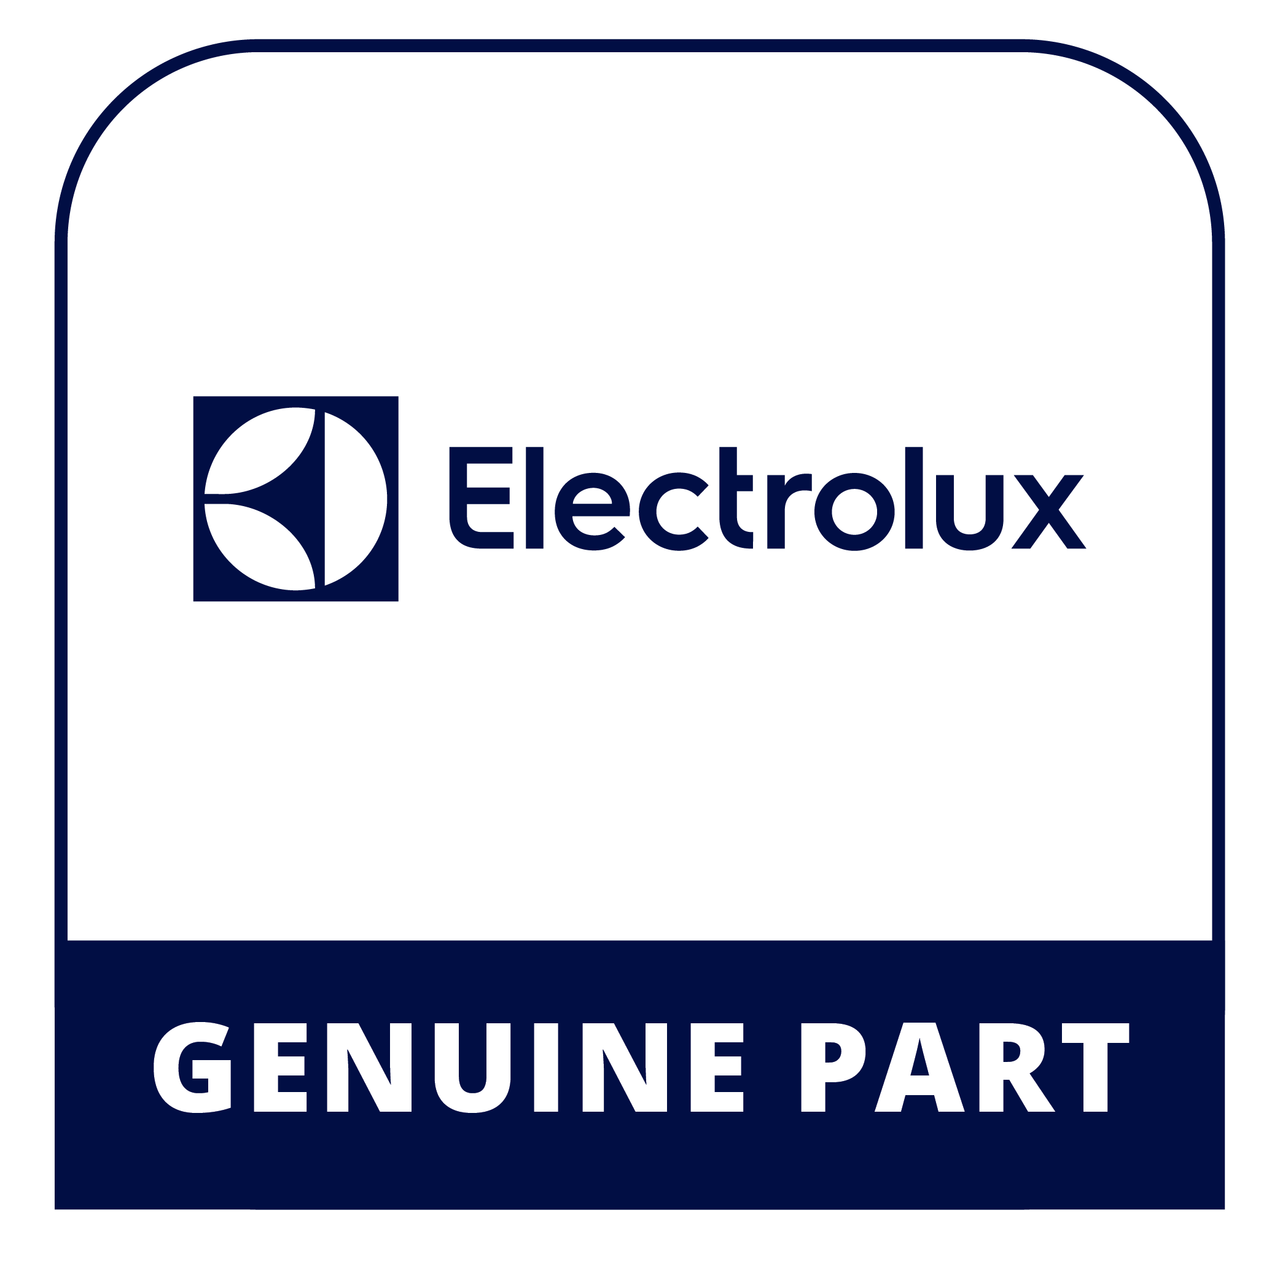 Frigidaire - Electrolux 5304500597 Trim - Genuine Electrolux Part